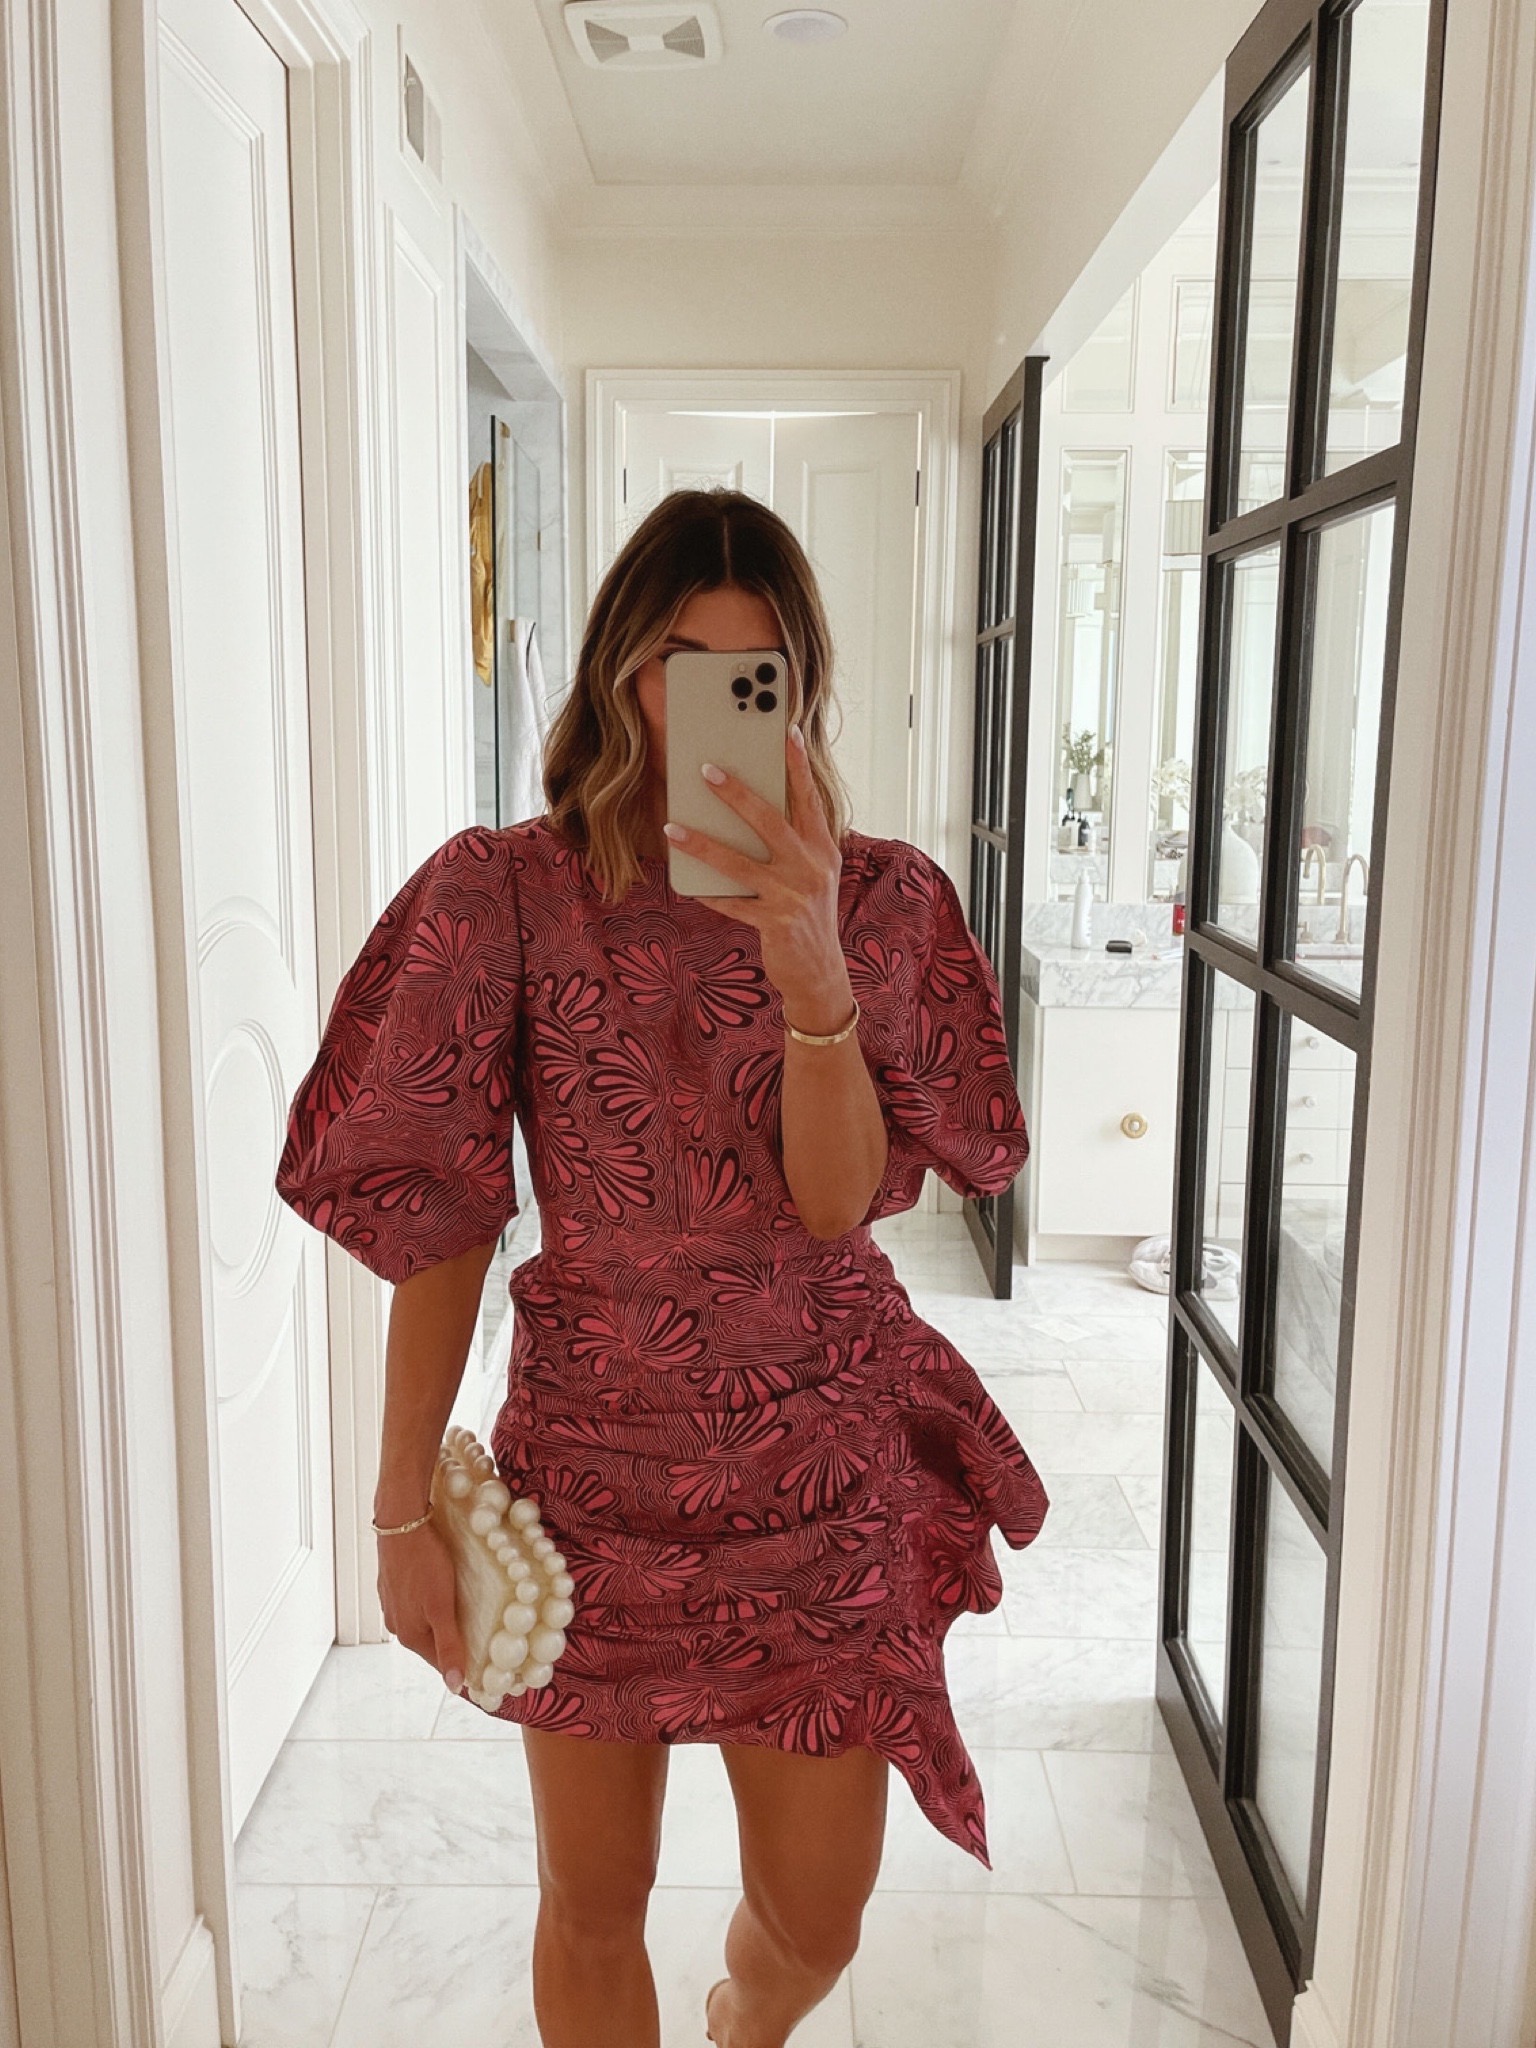 Cella Jane – A Fashion, Beauty & Lifestyle Blogger